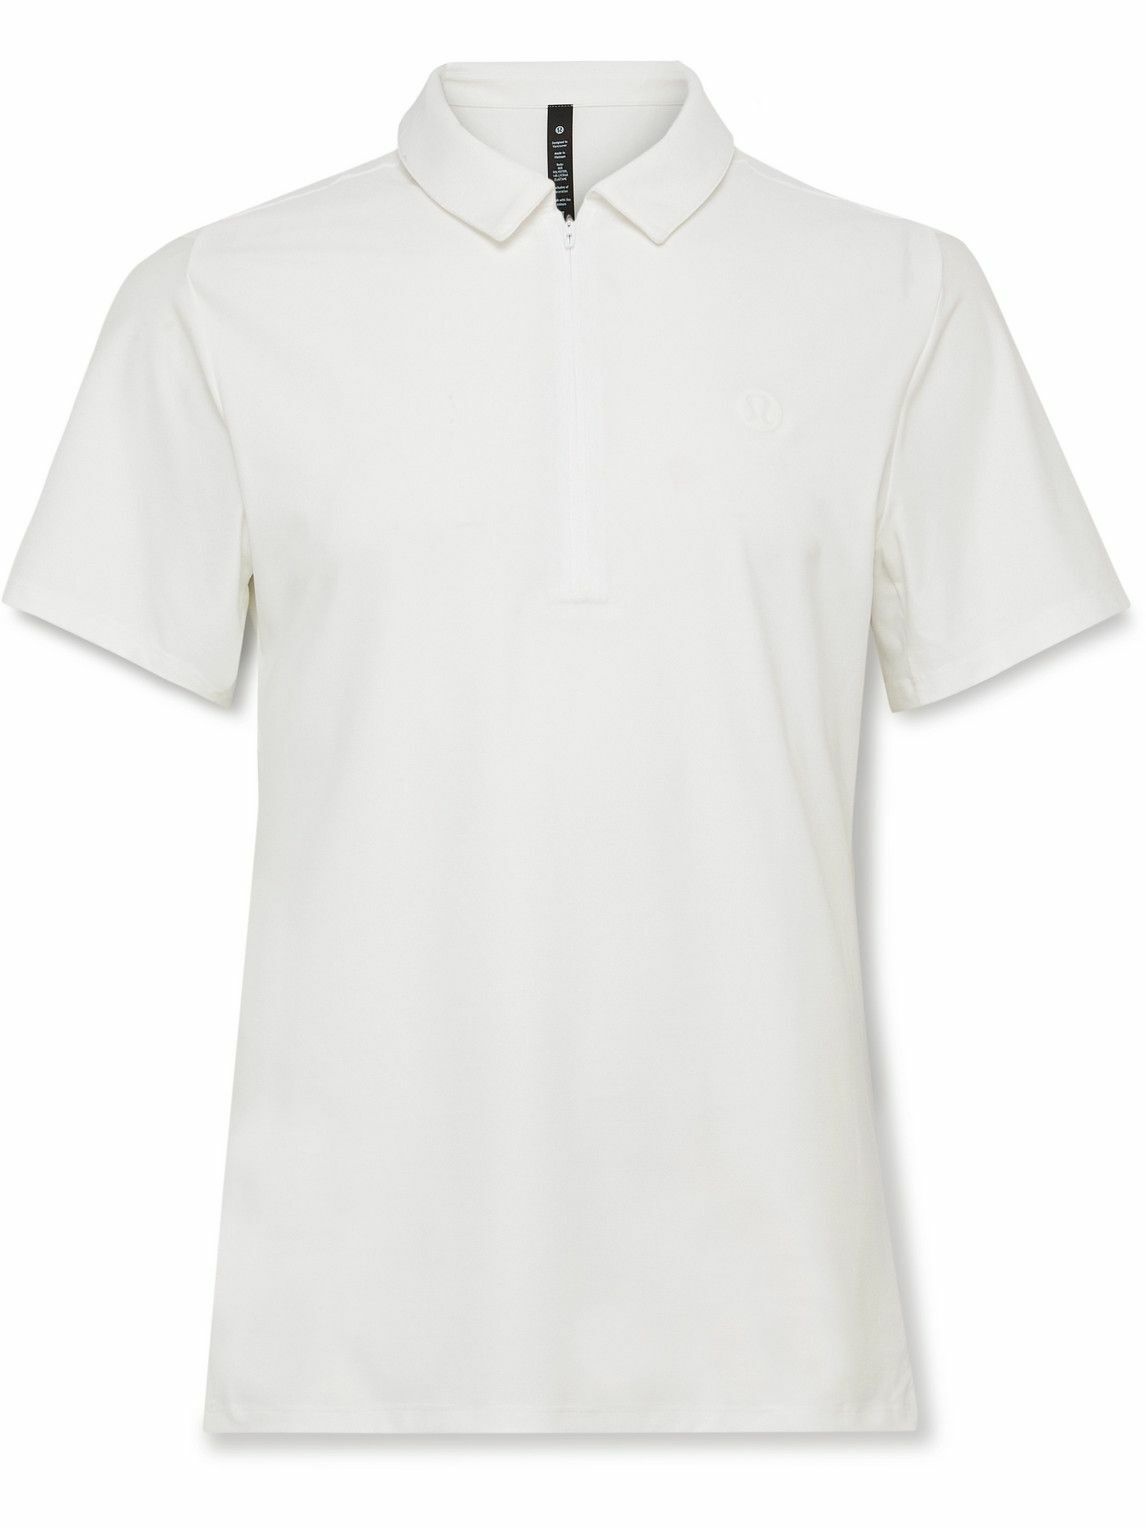 Lululemon - Stretch-Jersey Tennis Polo Shirt - White Lululemon